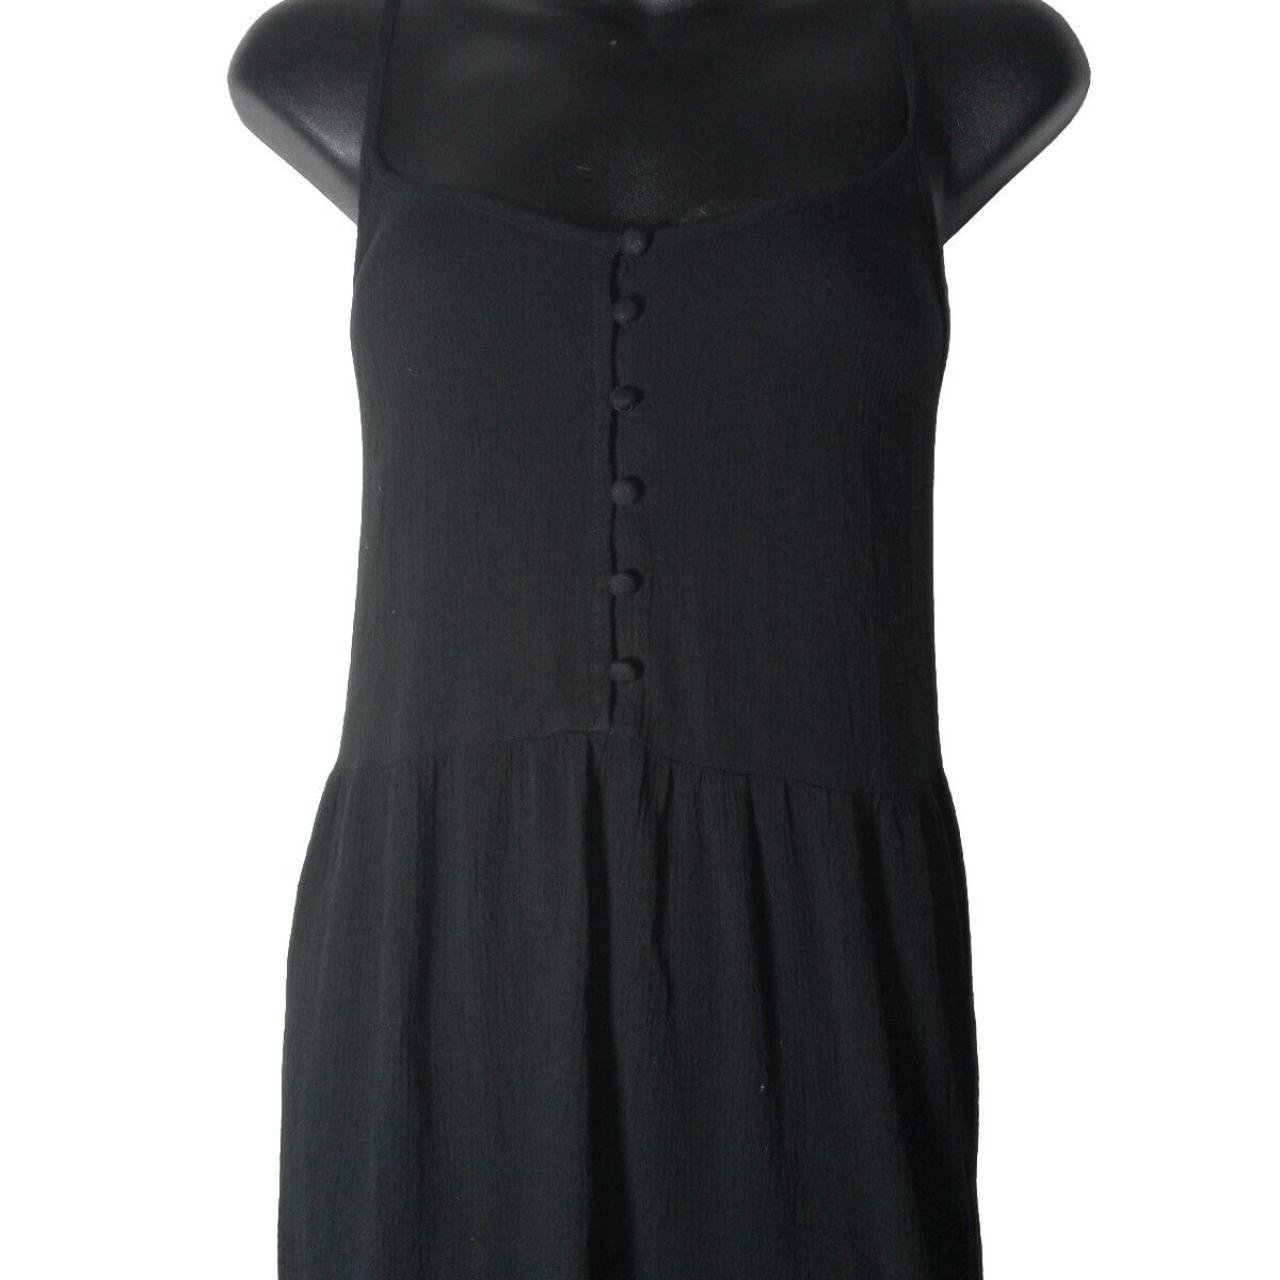 Mossimo Supply Co Women's Beach Dress Black... - Depop